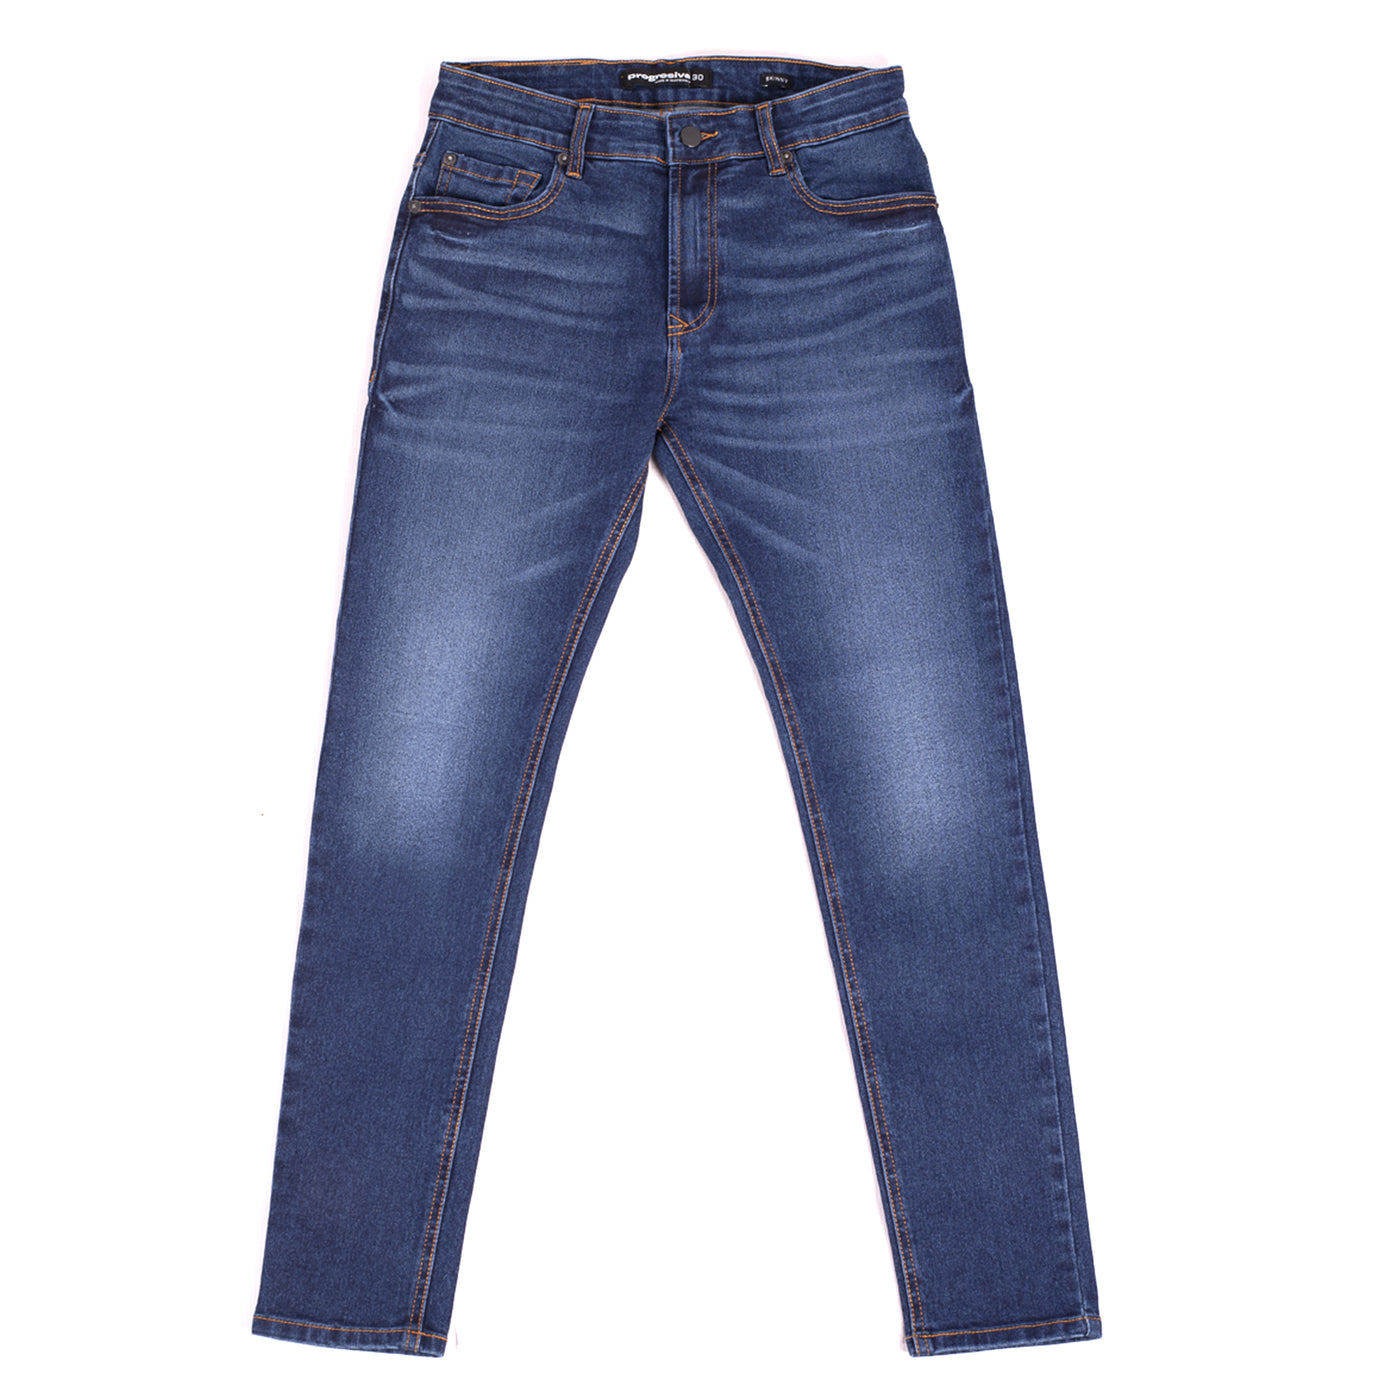 Jeans super denim - LISBOA - skinny